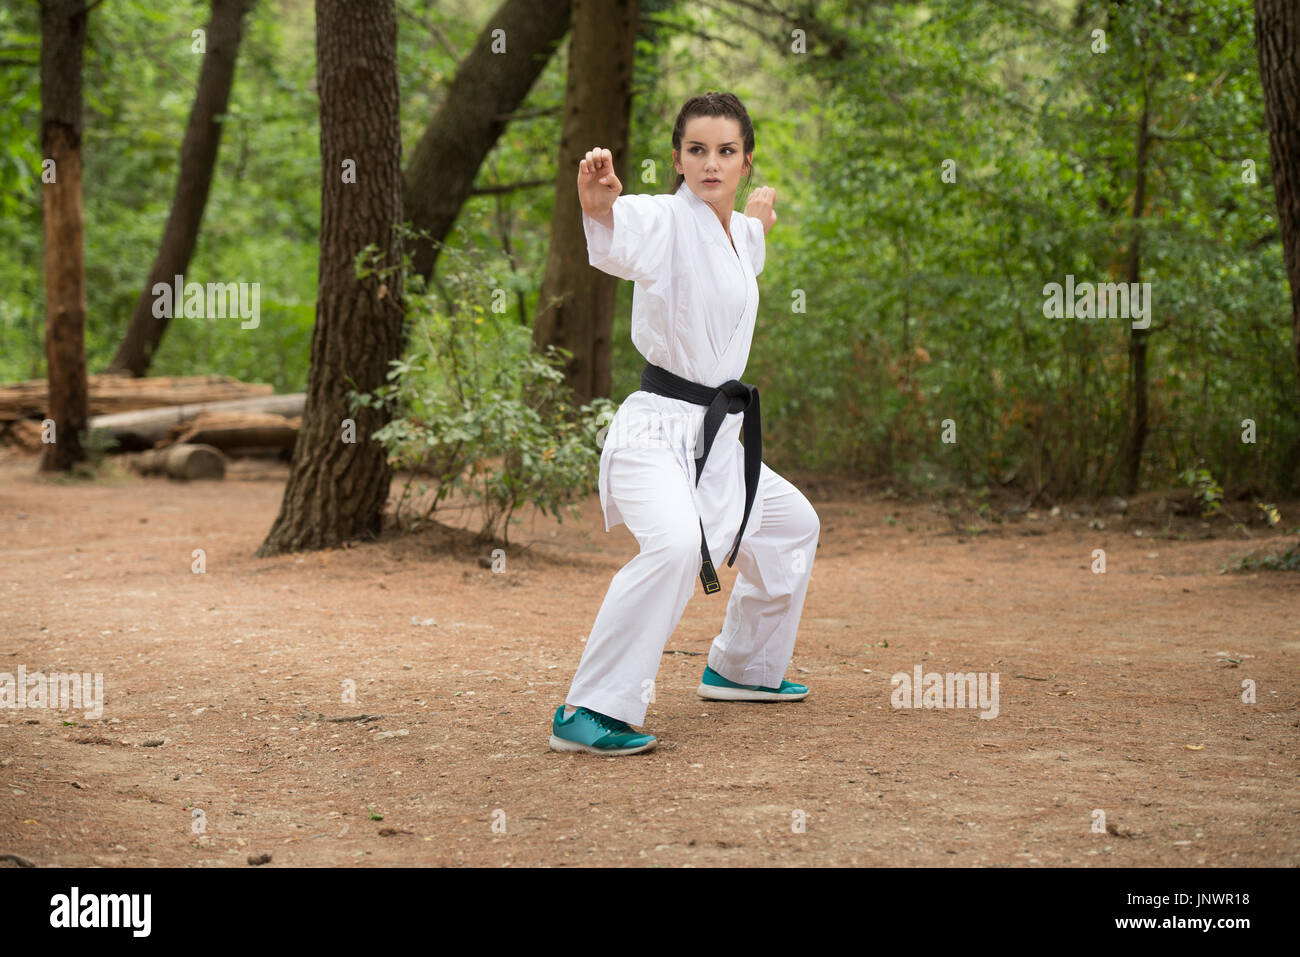 Mosse di karate immagini e fotografie stock ad alta risoluzione - Alamy